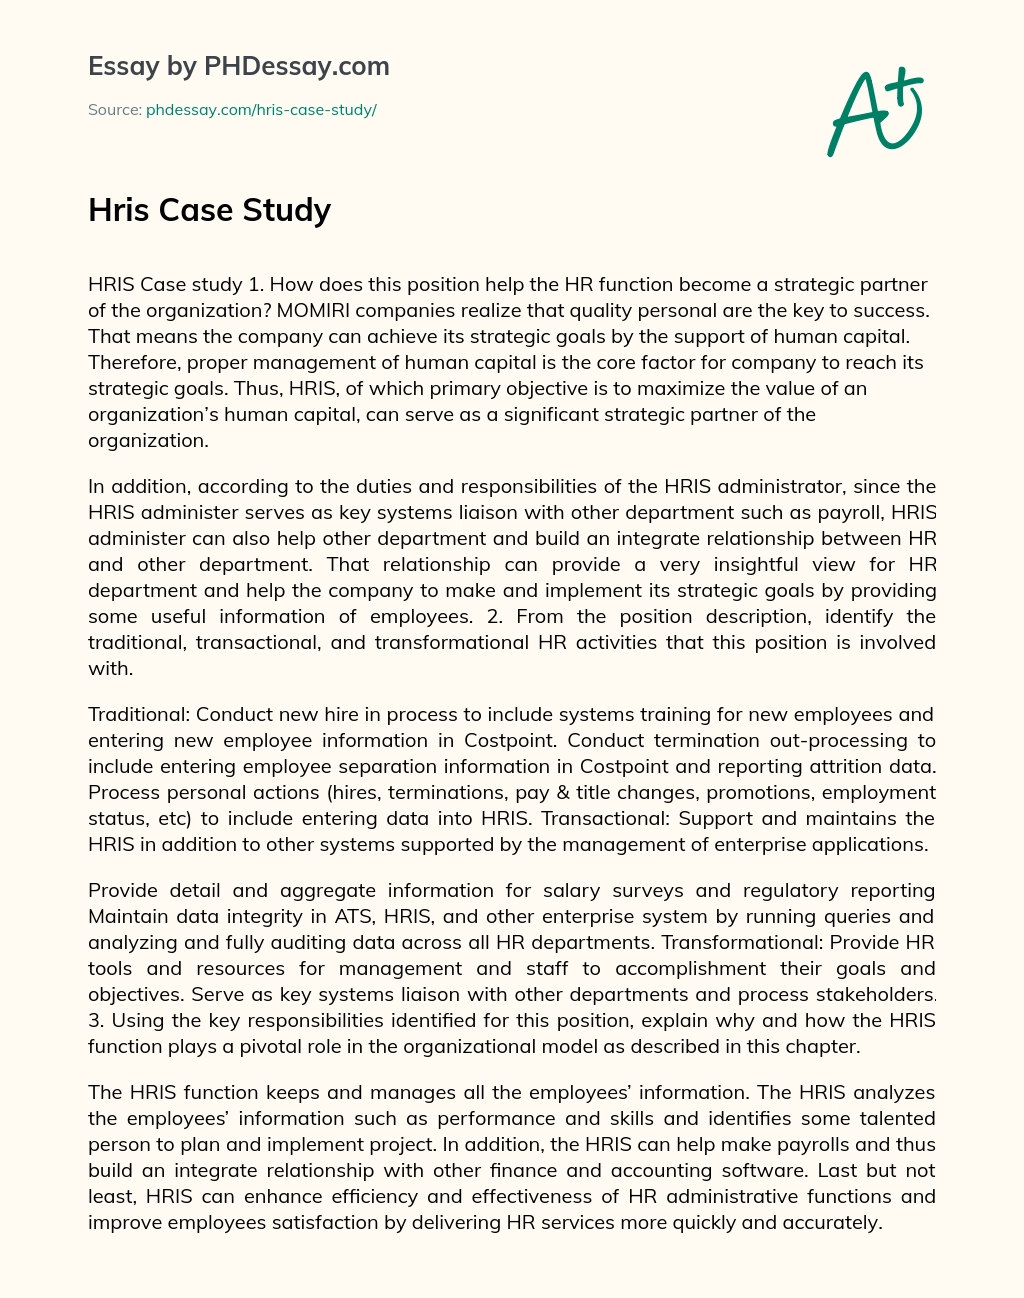 Hris Case Study essay